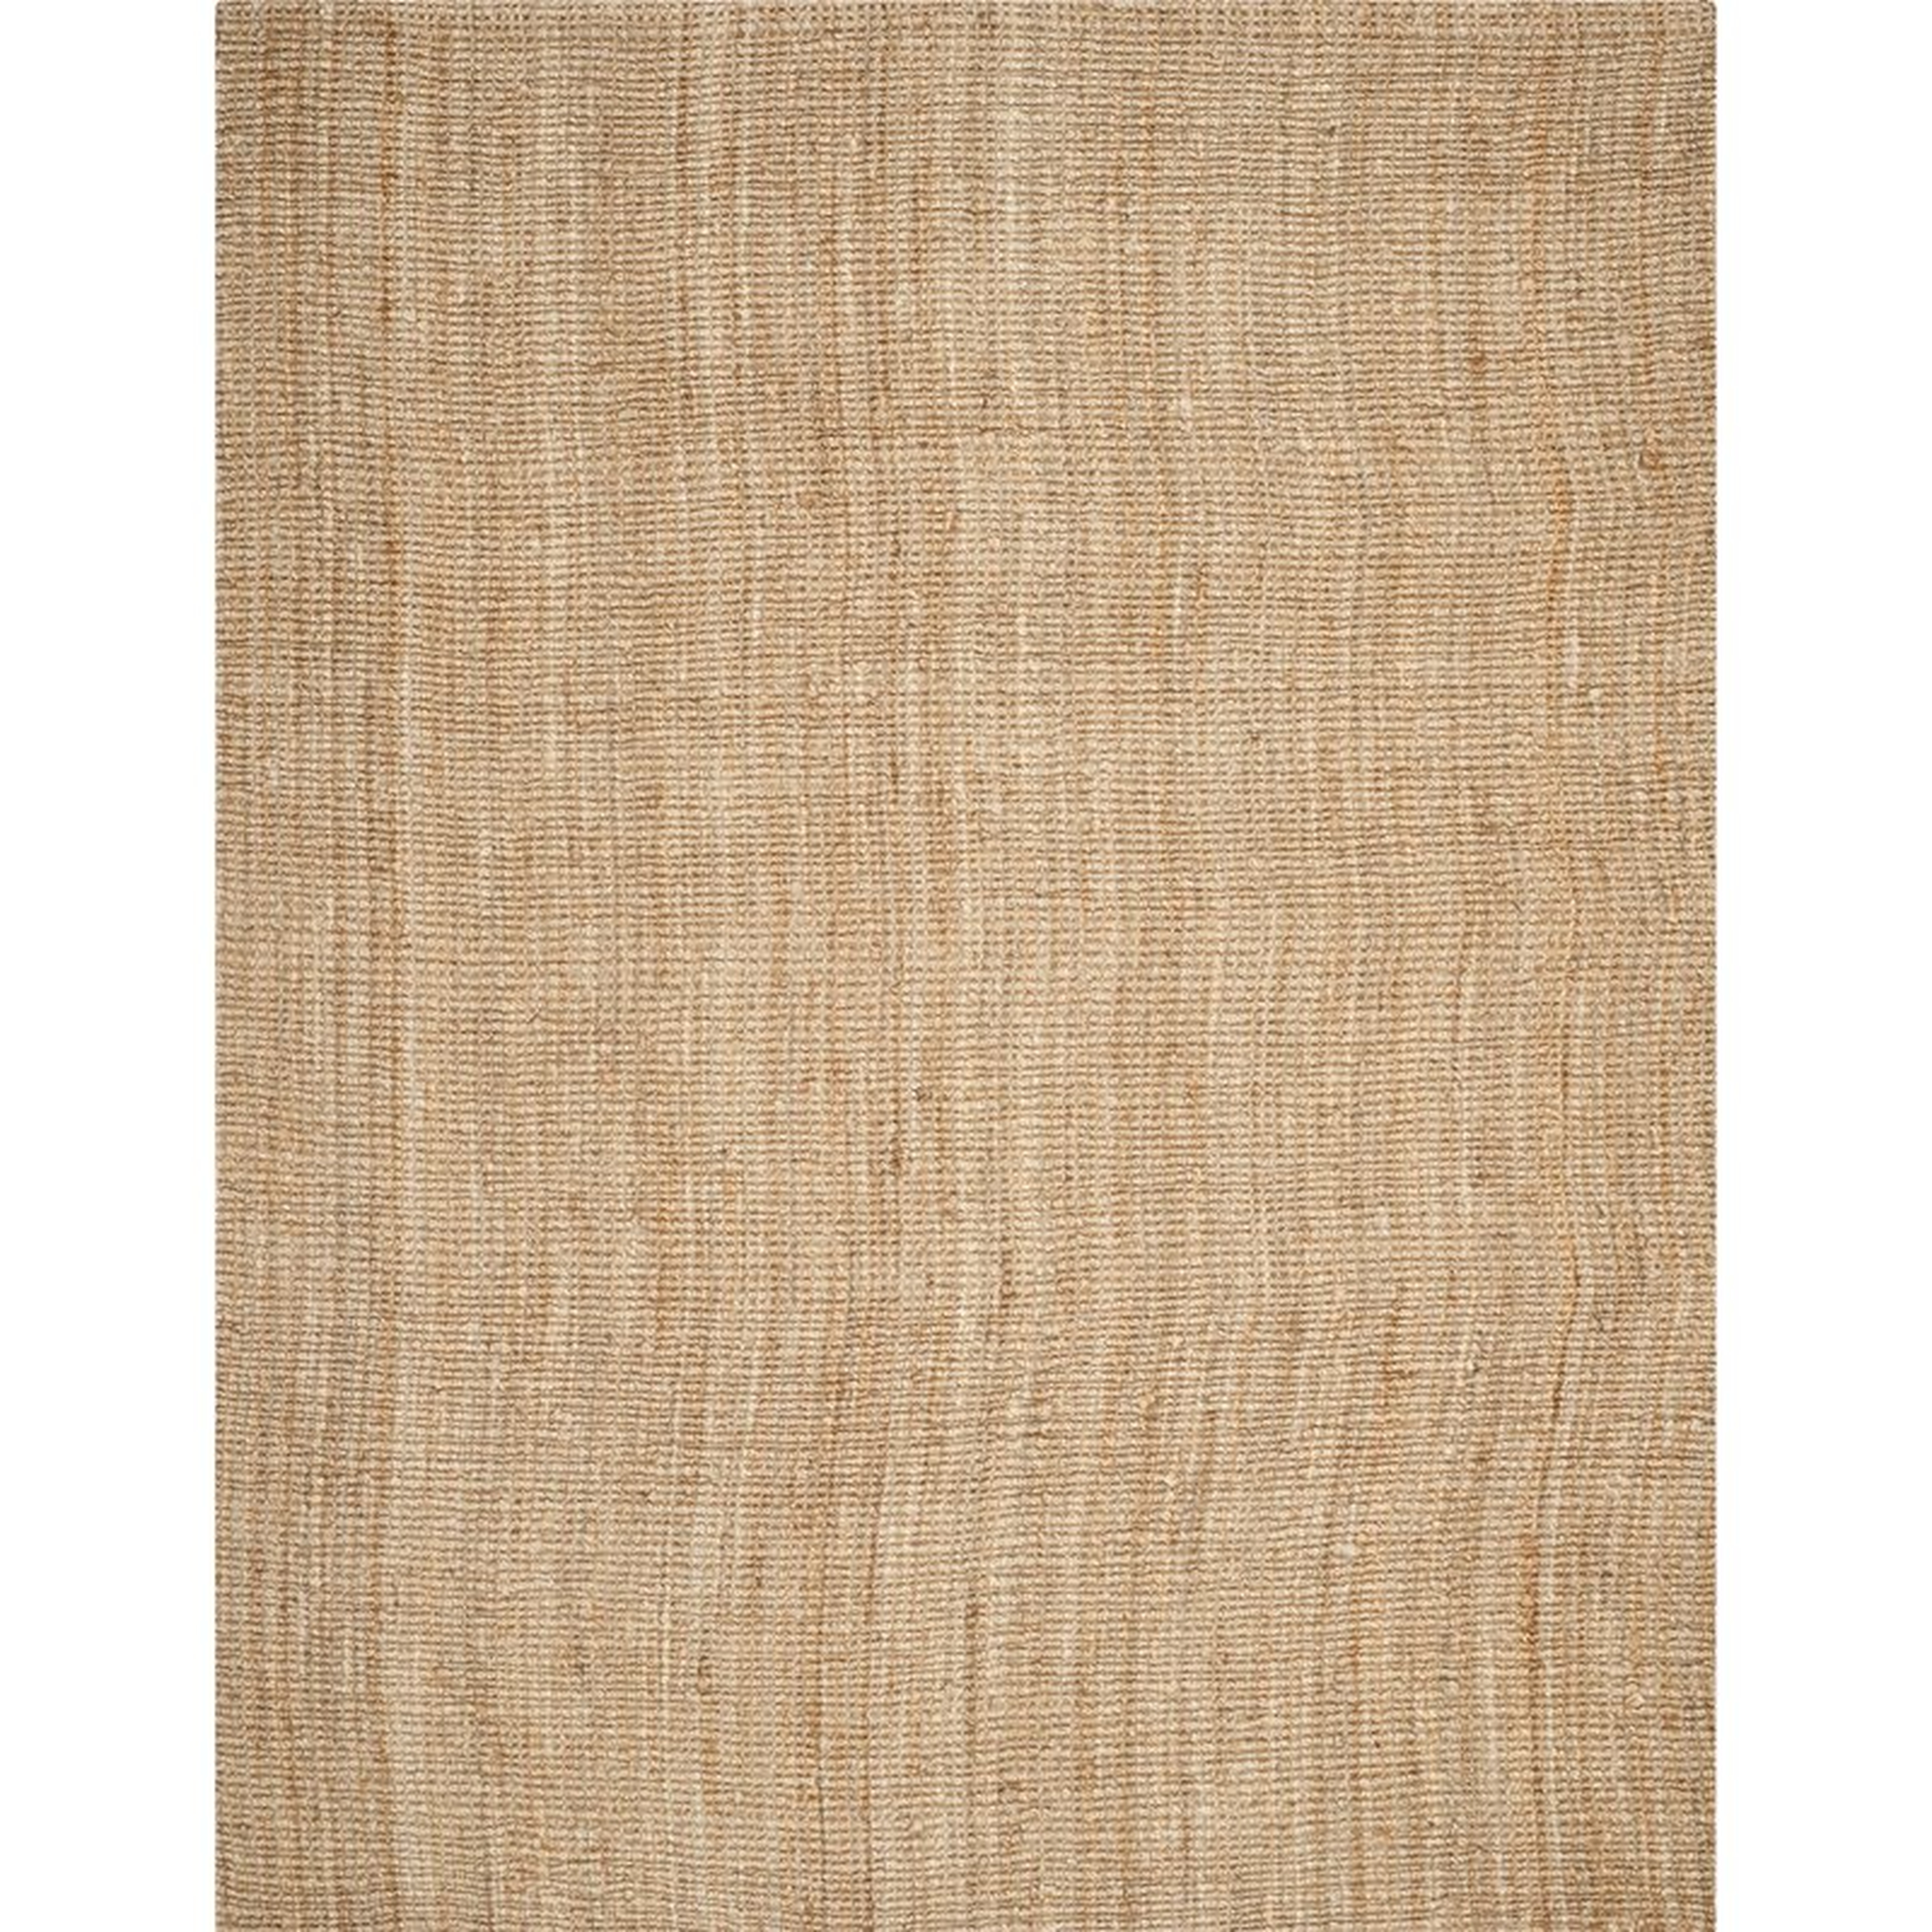 Shamiera Handmade Flatweave Jute/Sisal Natural Area Rug // Natural // Size: 11'x15' - Wayfair